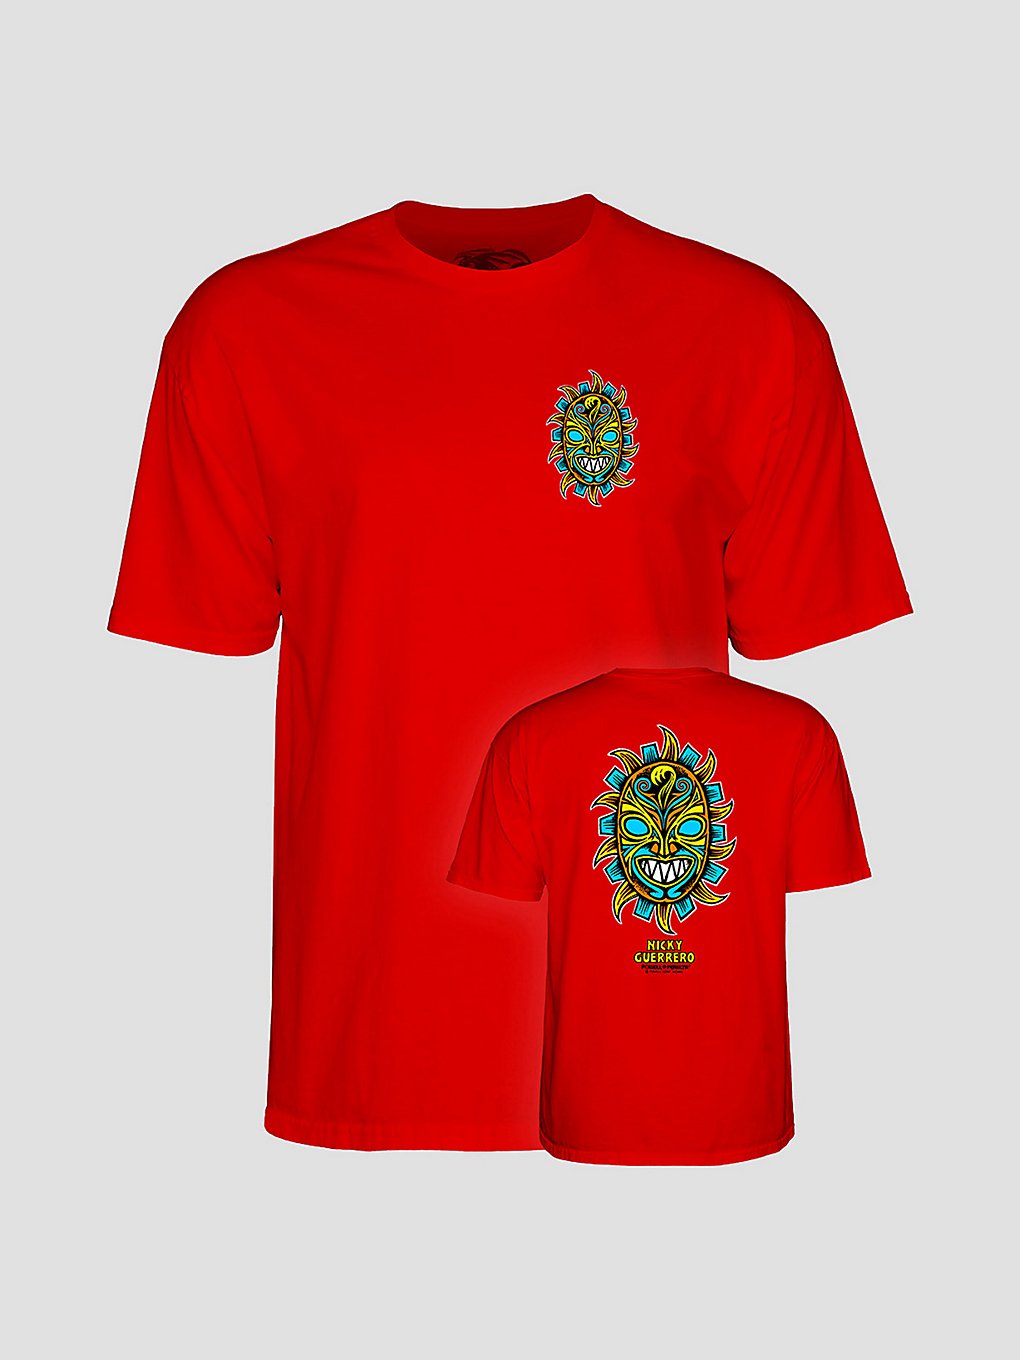 Powell Peralta Nicky Guerrero Mask T-Shirt rød